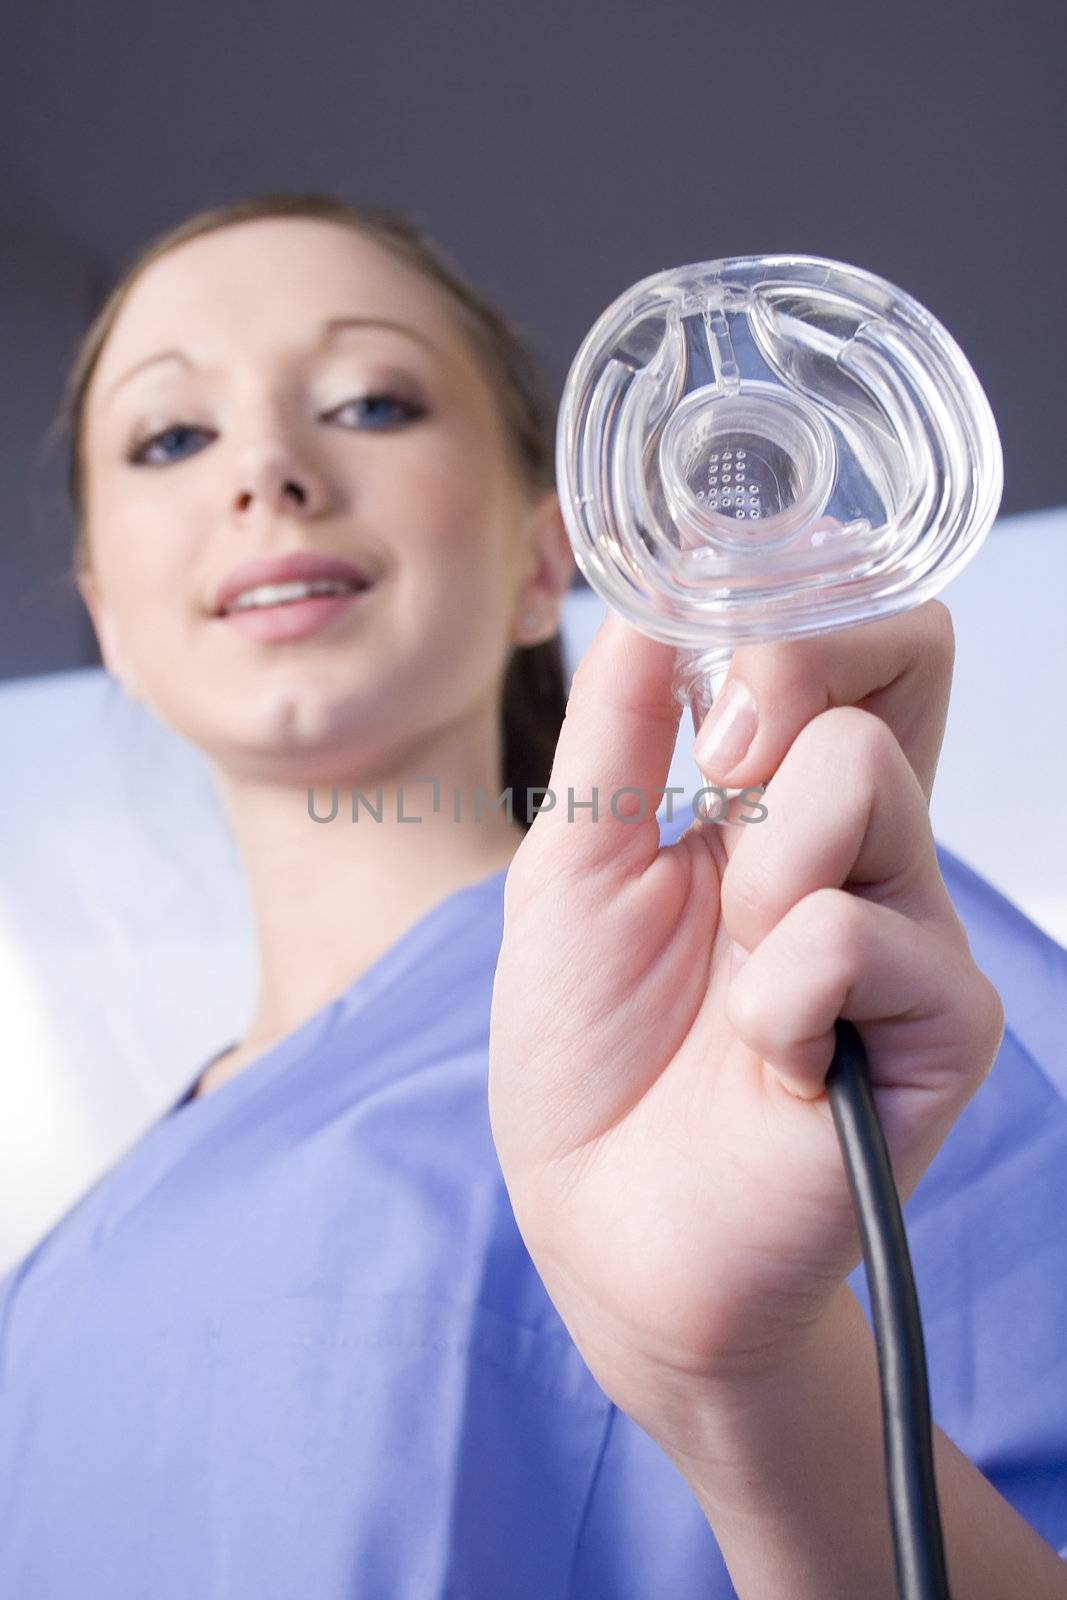 Nurse with anesthesia by evok20